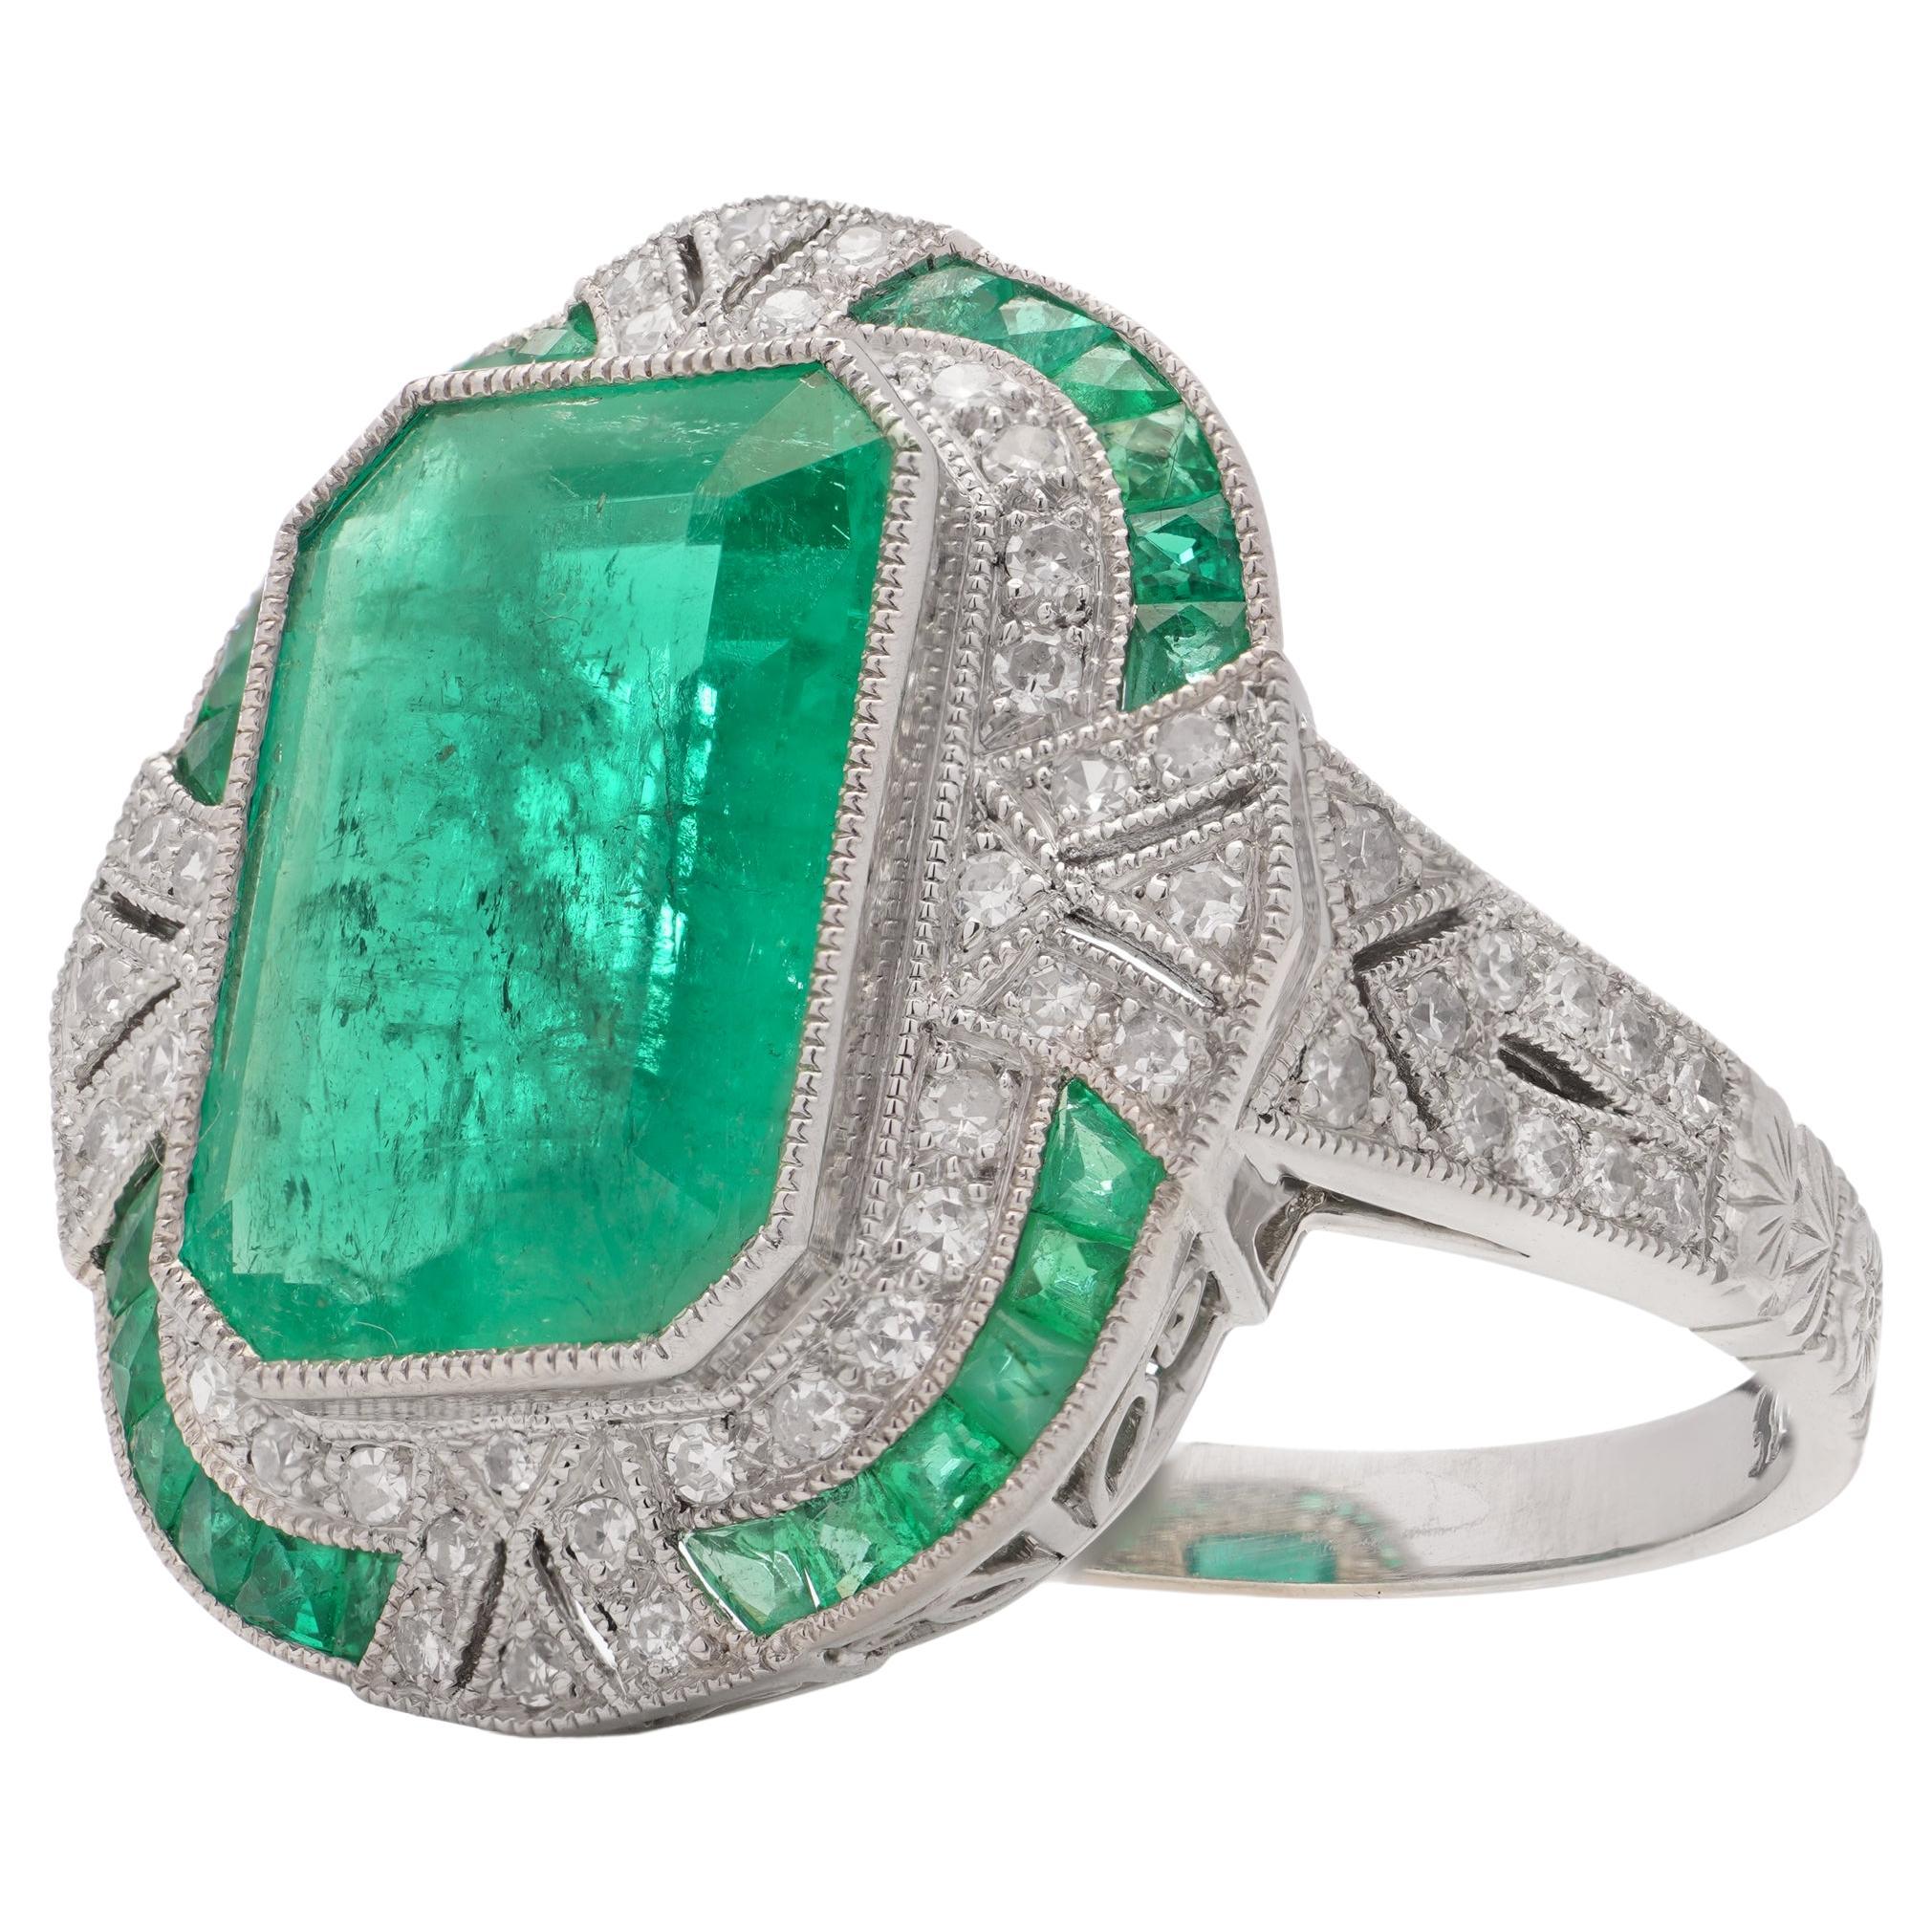 Platinum Art Deco-inspired 4.21 carats of Emerald fashion ring